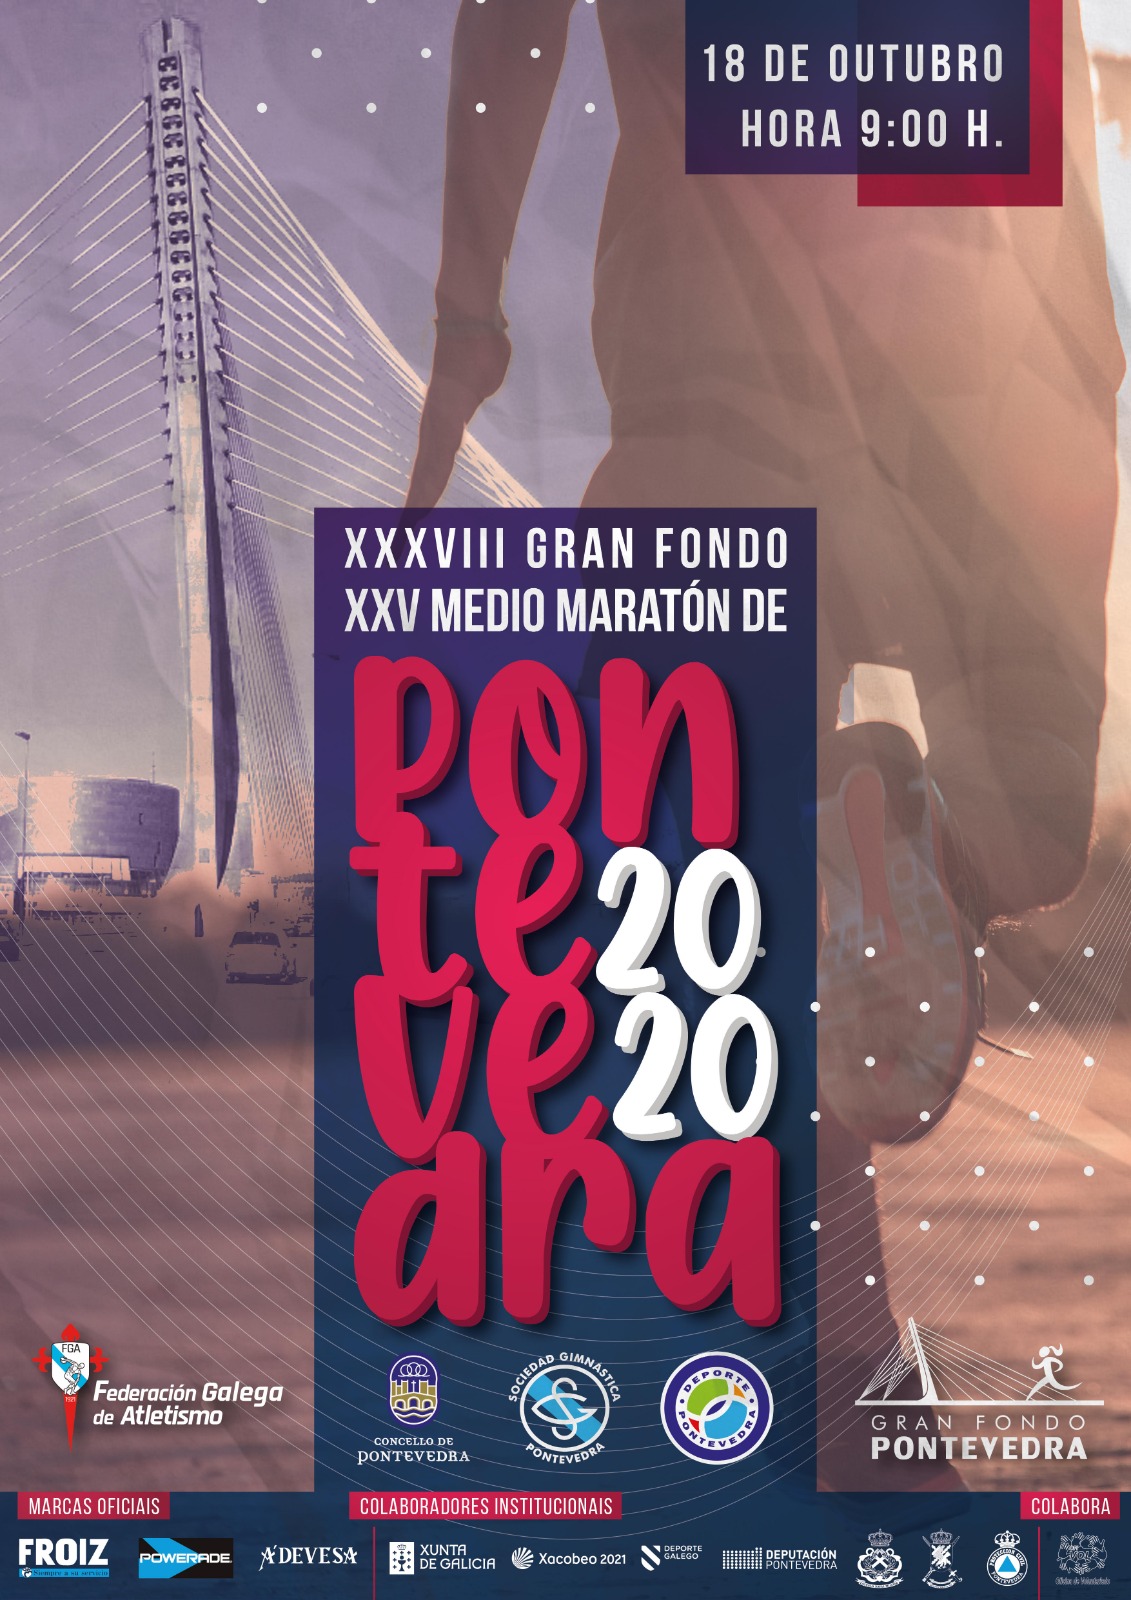 XXXVIII Gran Fondo – XXV Medio Maratón Pontevedra 2020